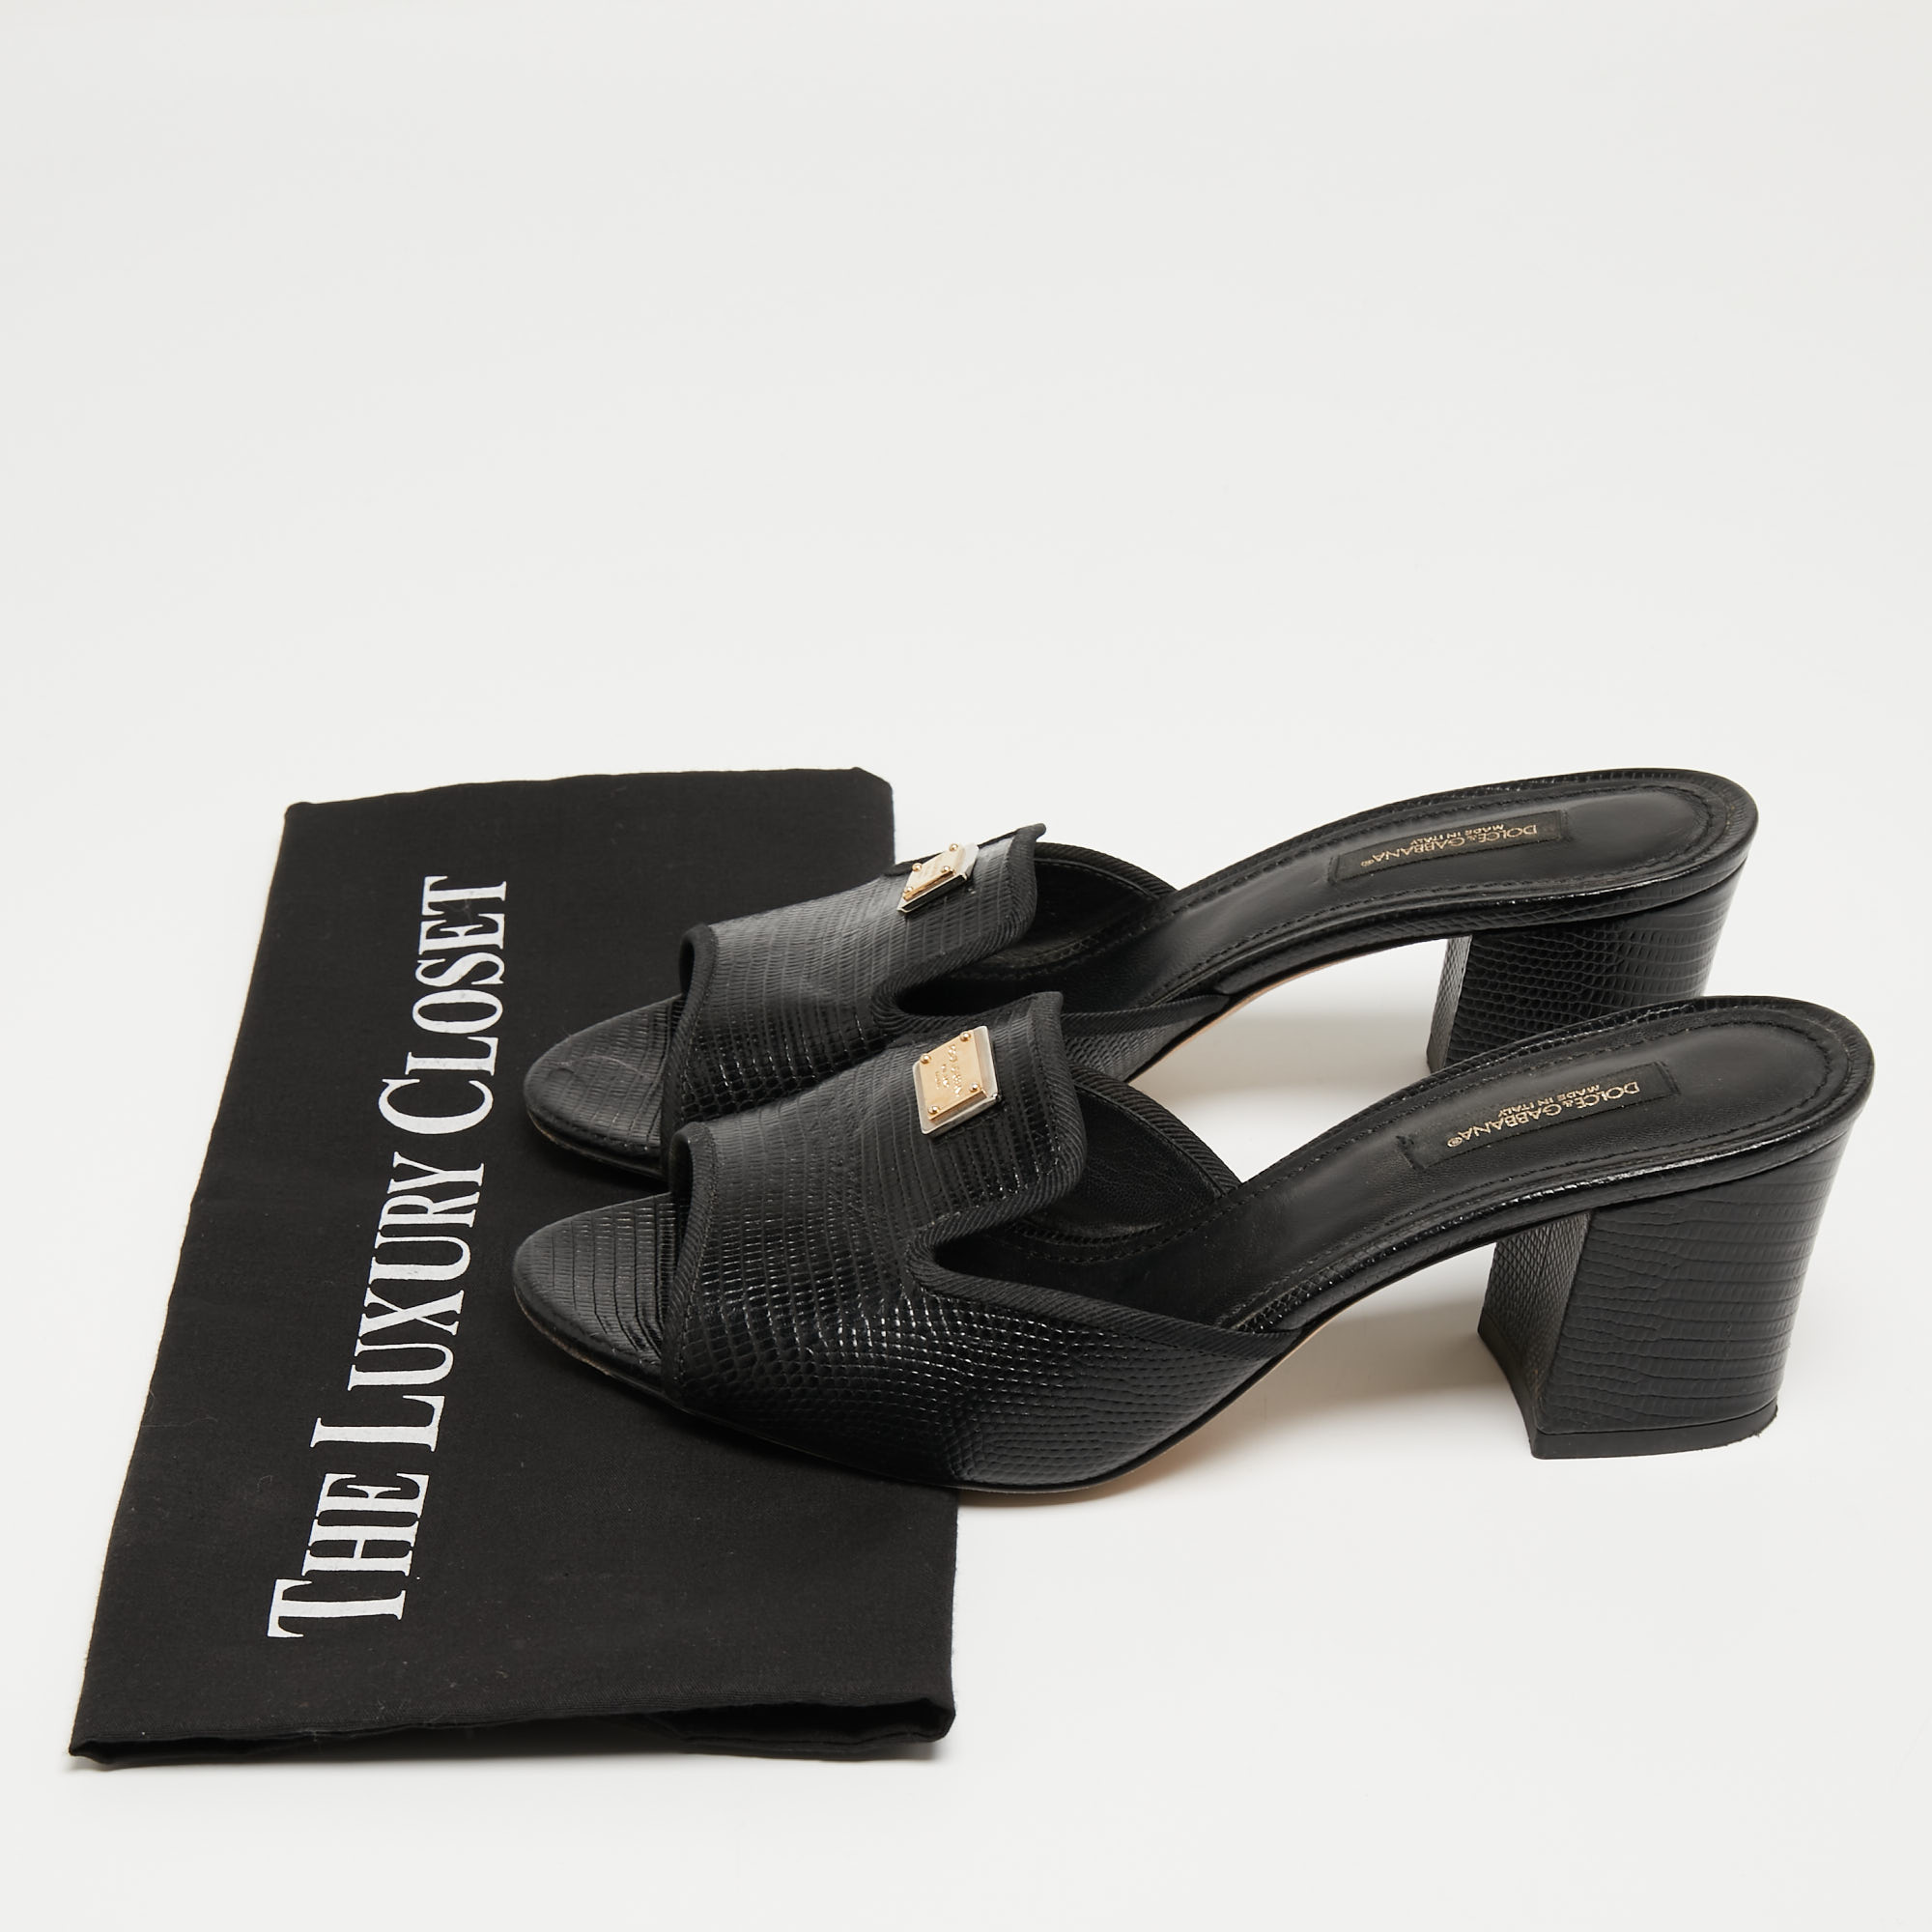 Dolce & Gabbana Black Lizard Embossed Leather Block Heel Mules Size 37.5